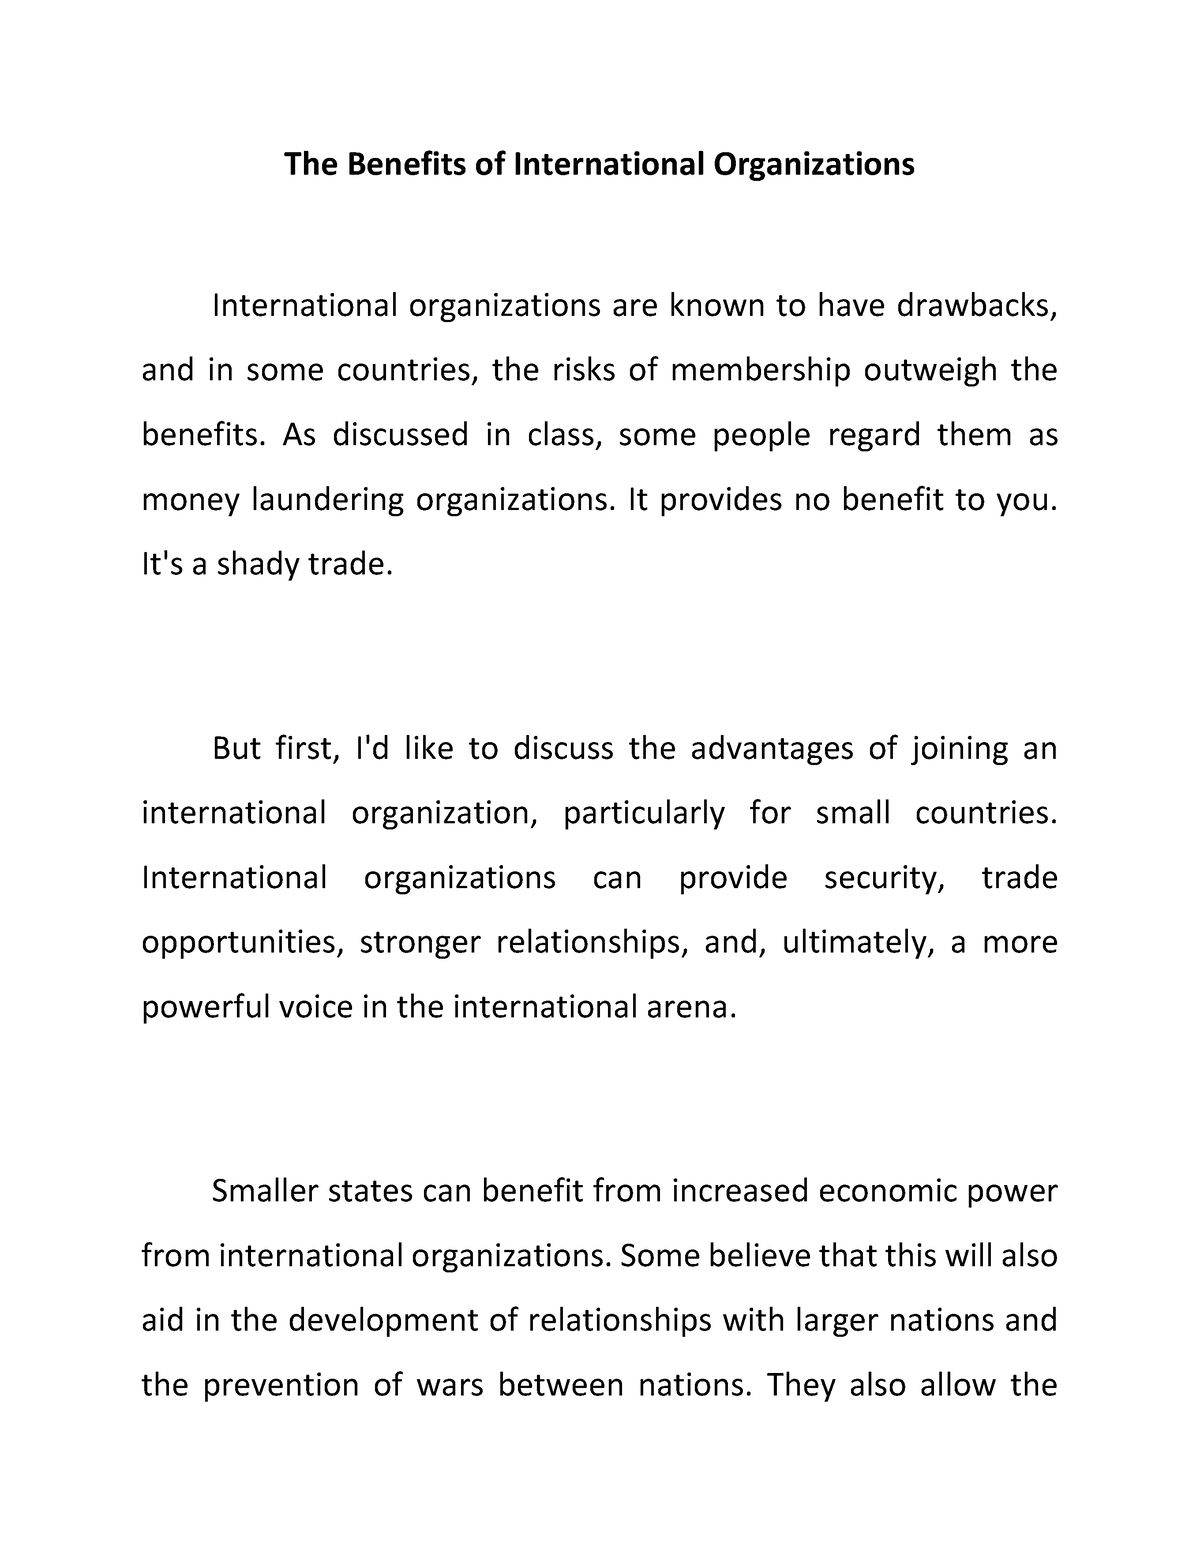 importance of international organizations essay